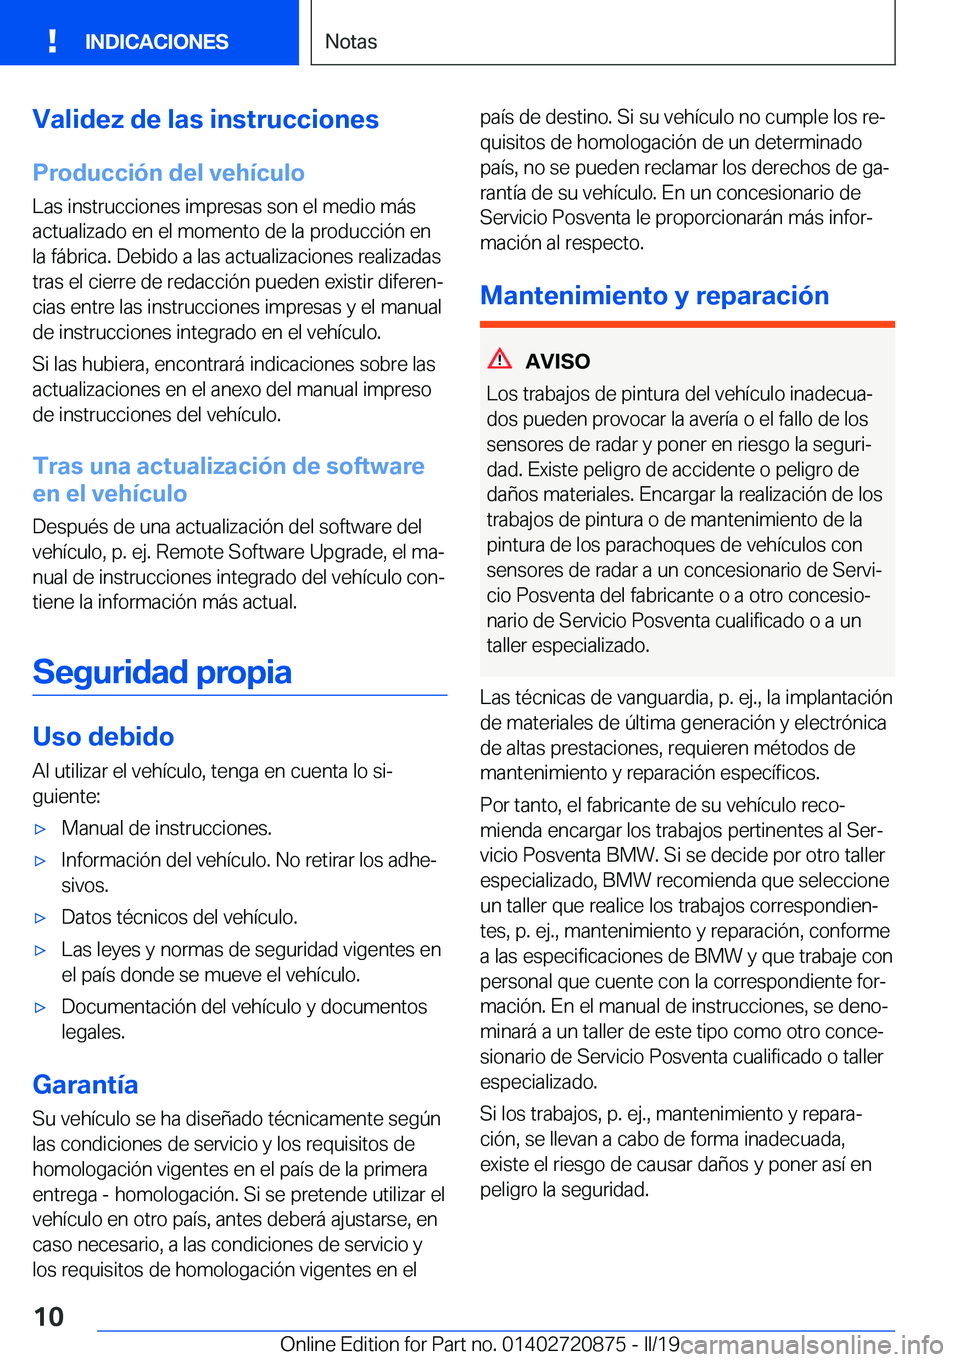 BMW X7 2019  Manuales de Empleo (in Spanish) �V�a�l�i�d�e�z��d�e��l�a�s��i�n�s�t�r�u�c�c�i�o�n�e�s�P�r�o�d�u�c�c�i�